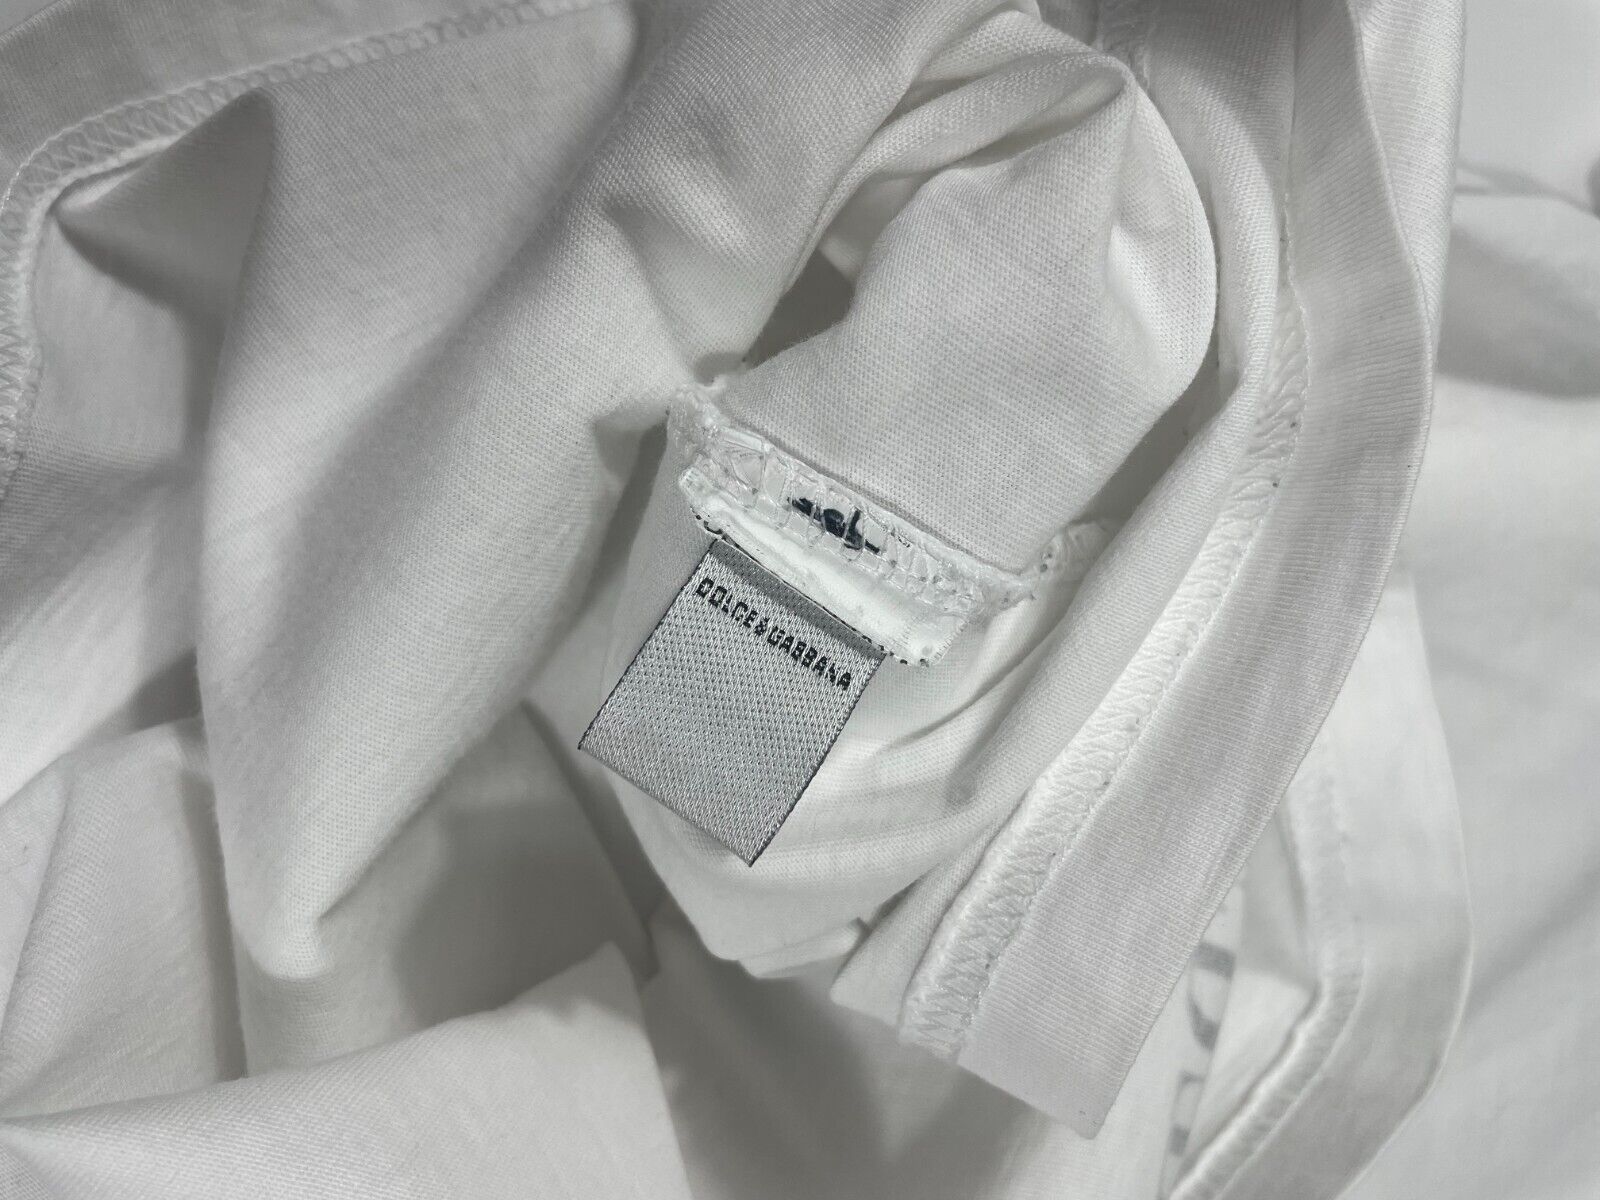 Dolce Gabbana D&G Monica Bellucci White T-shirt Xs-S sz y2k big print